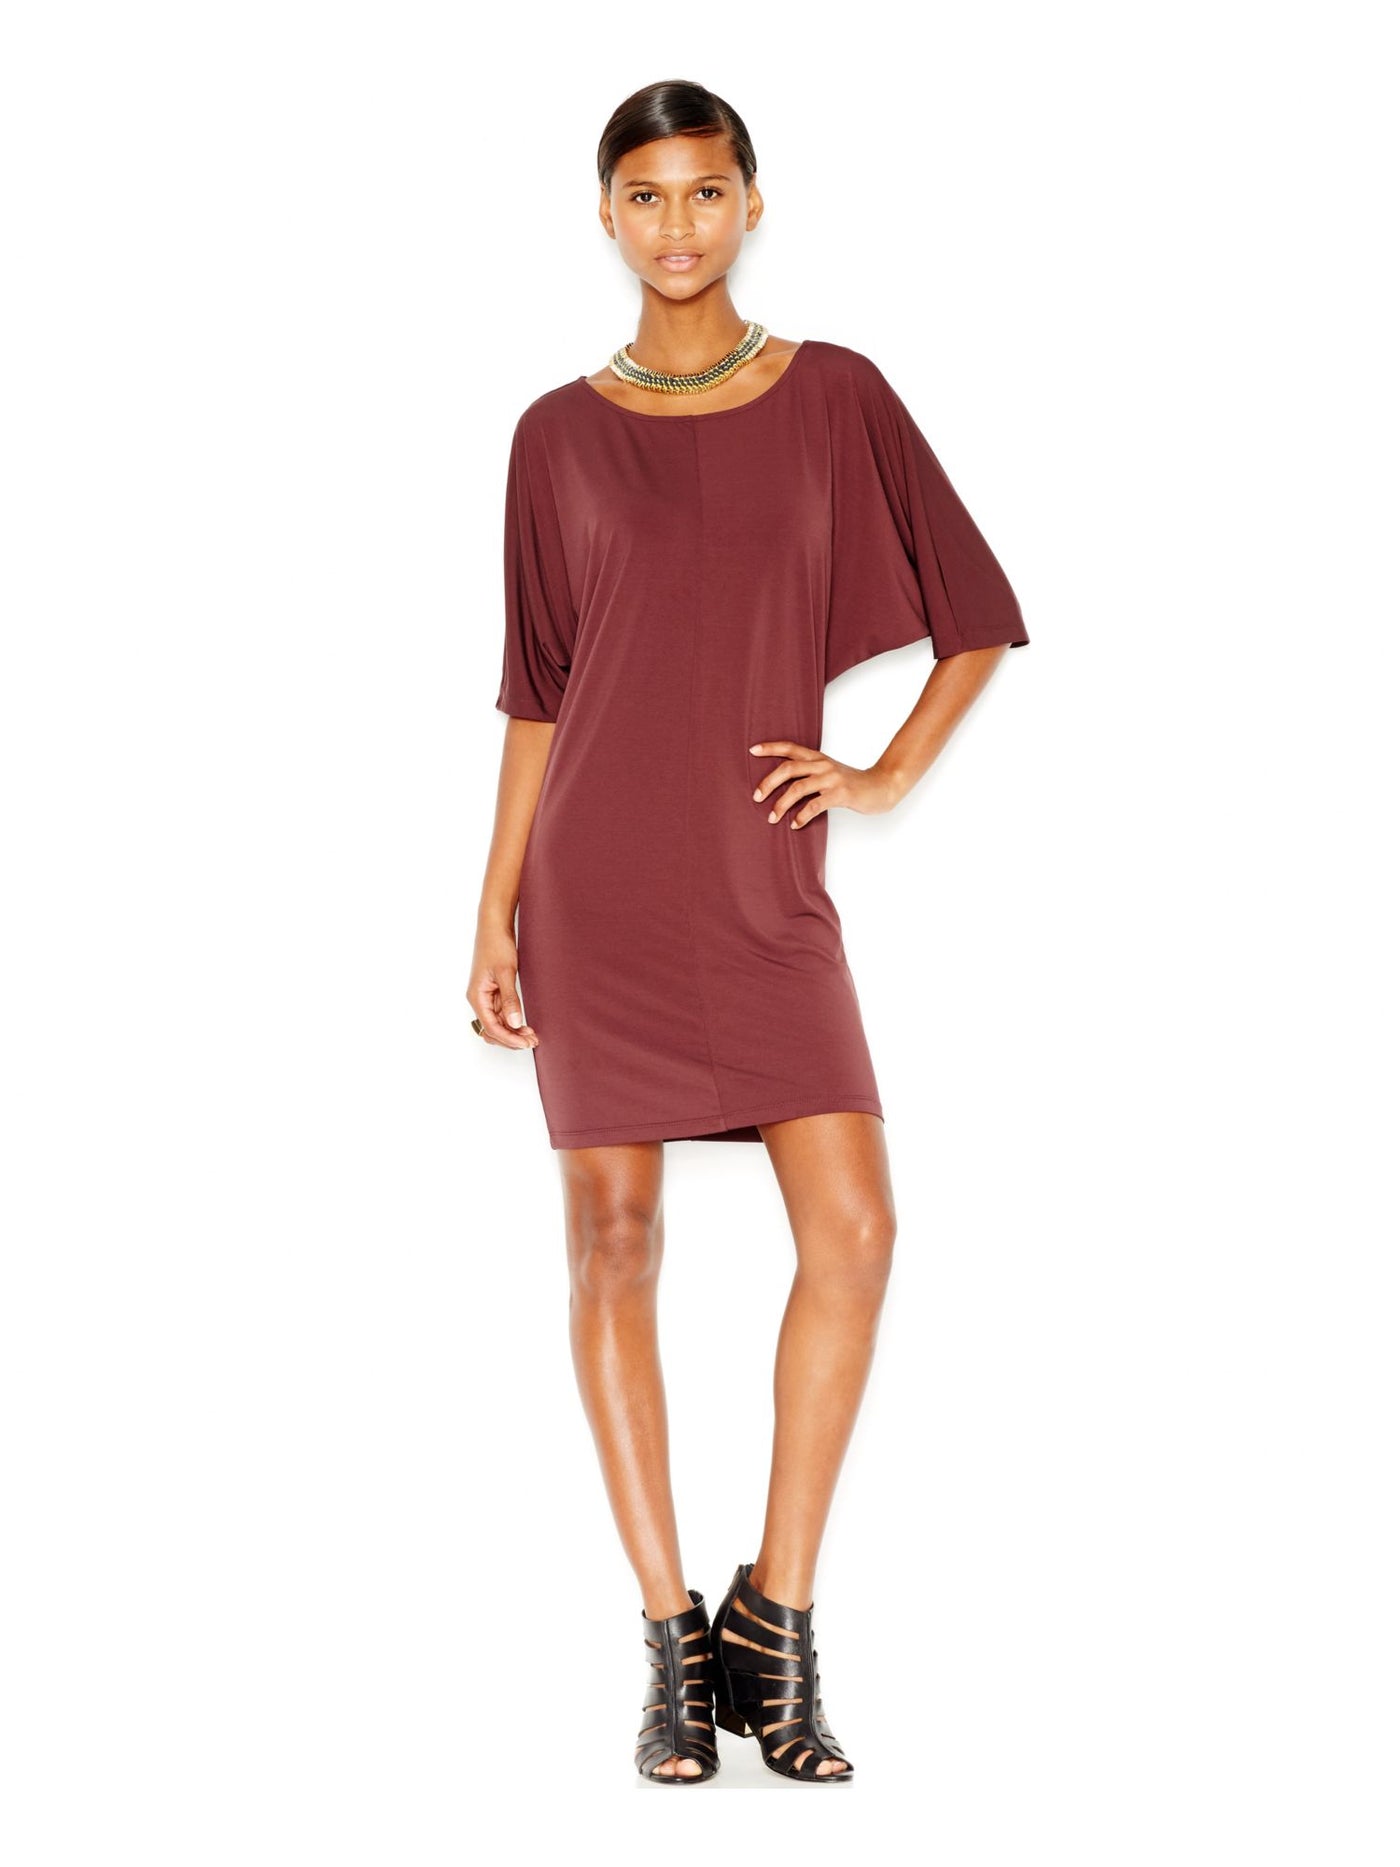 BAR III Womens Burgundy Dolman Sleeve Scoop Neck Knee Length Dress Size: S